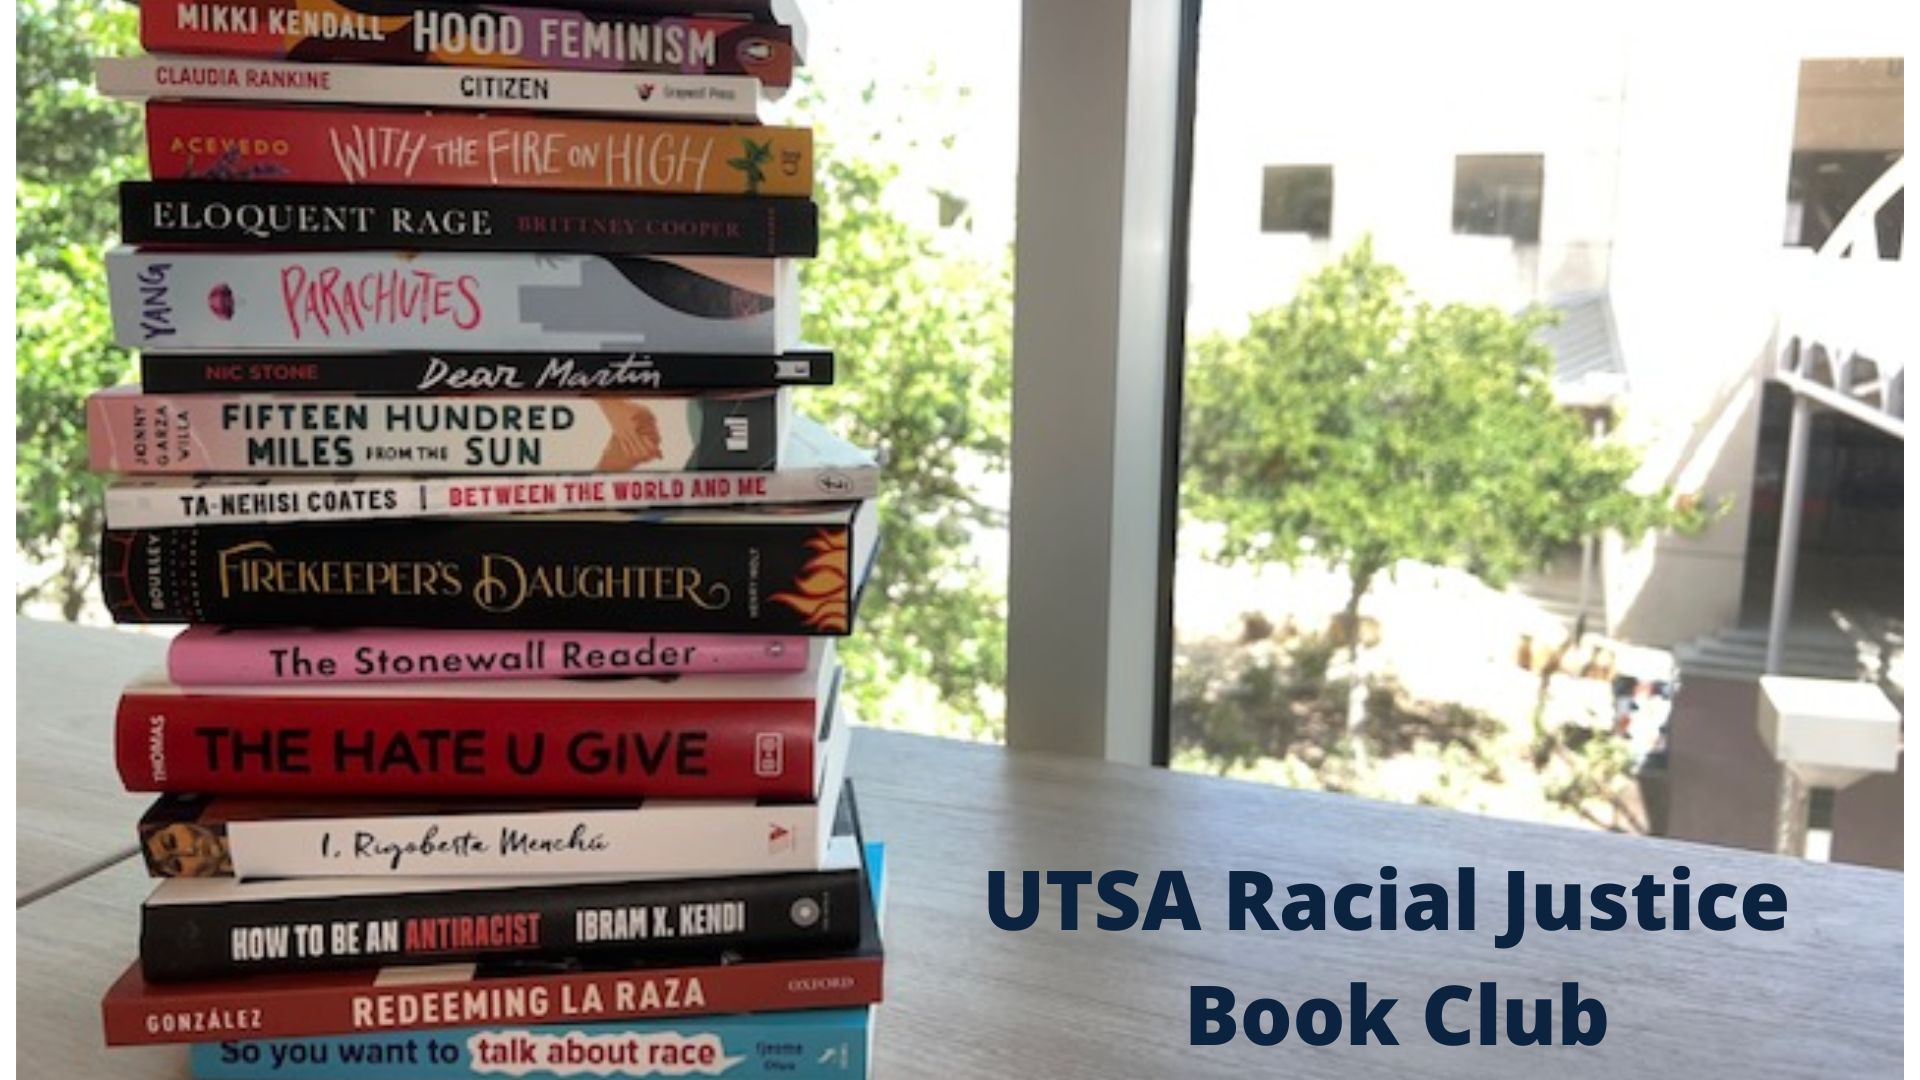 UTSA-Racial-Justice-Book-Club_Ann-Trujillo.jpg